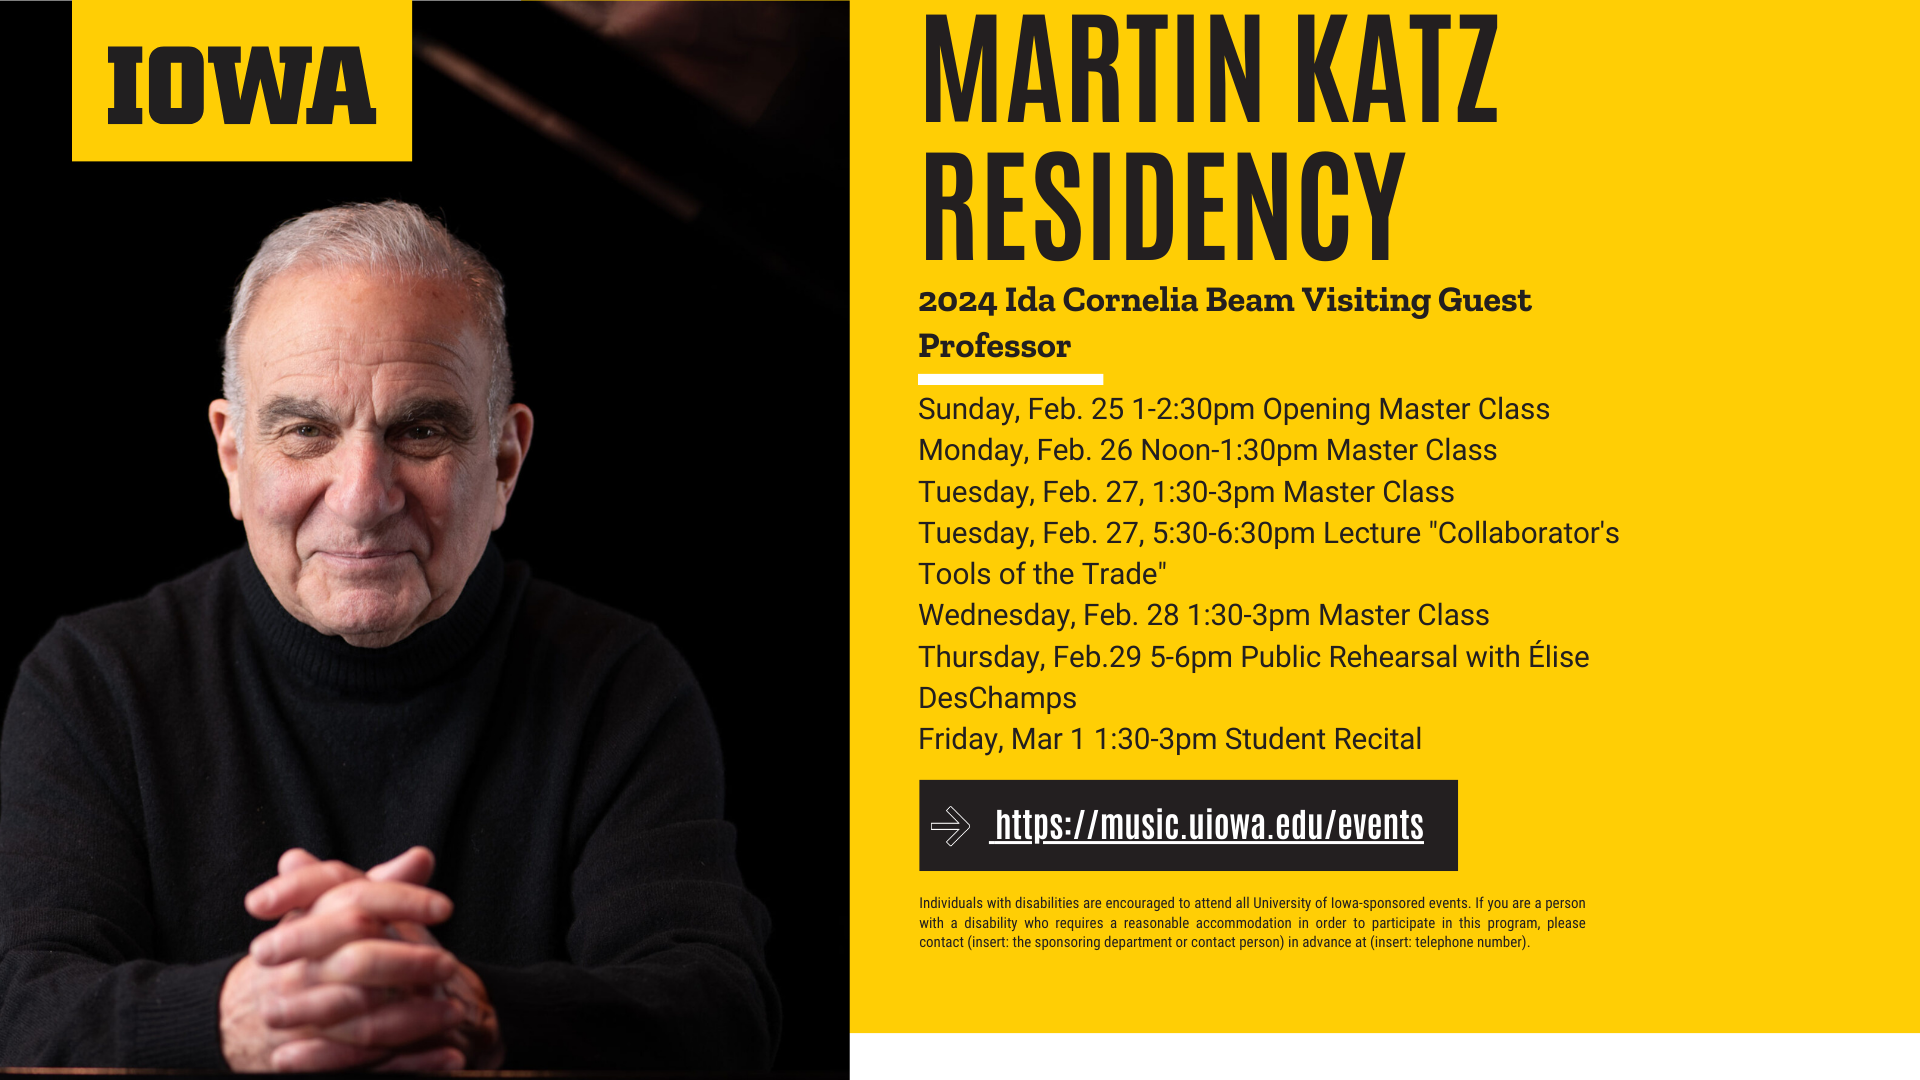 Martin Katz residency